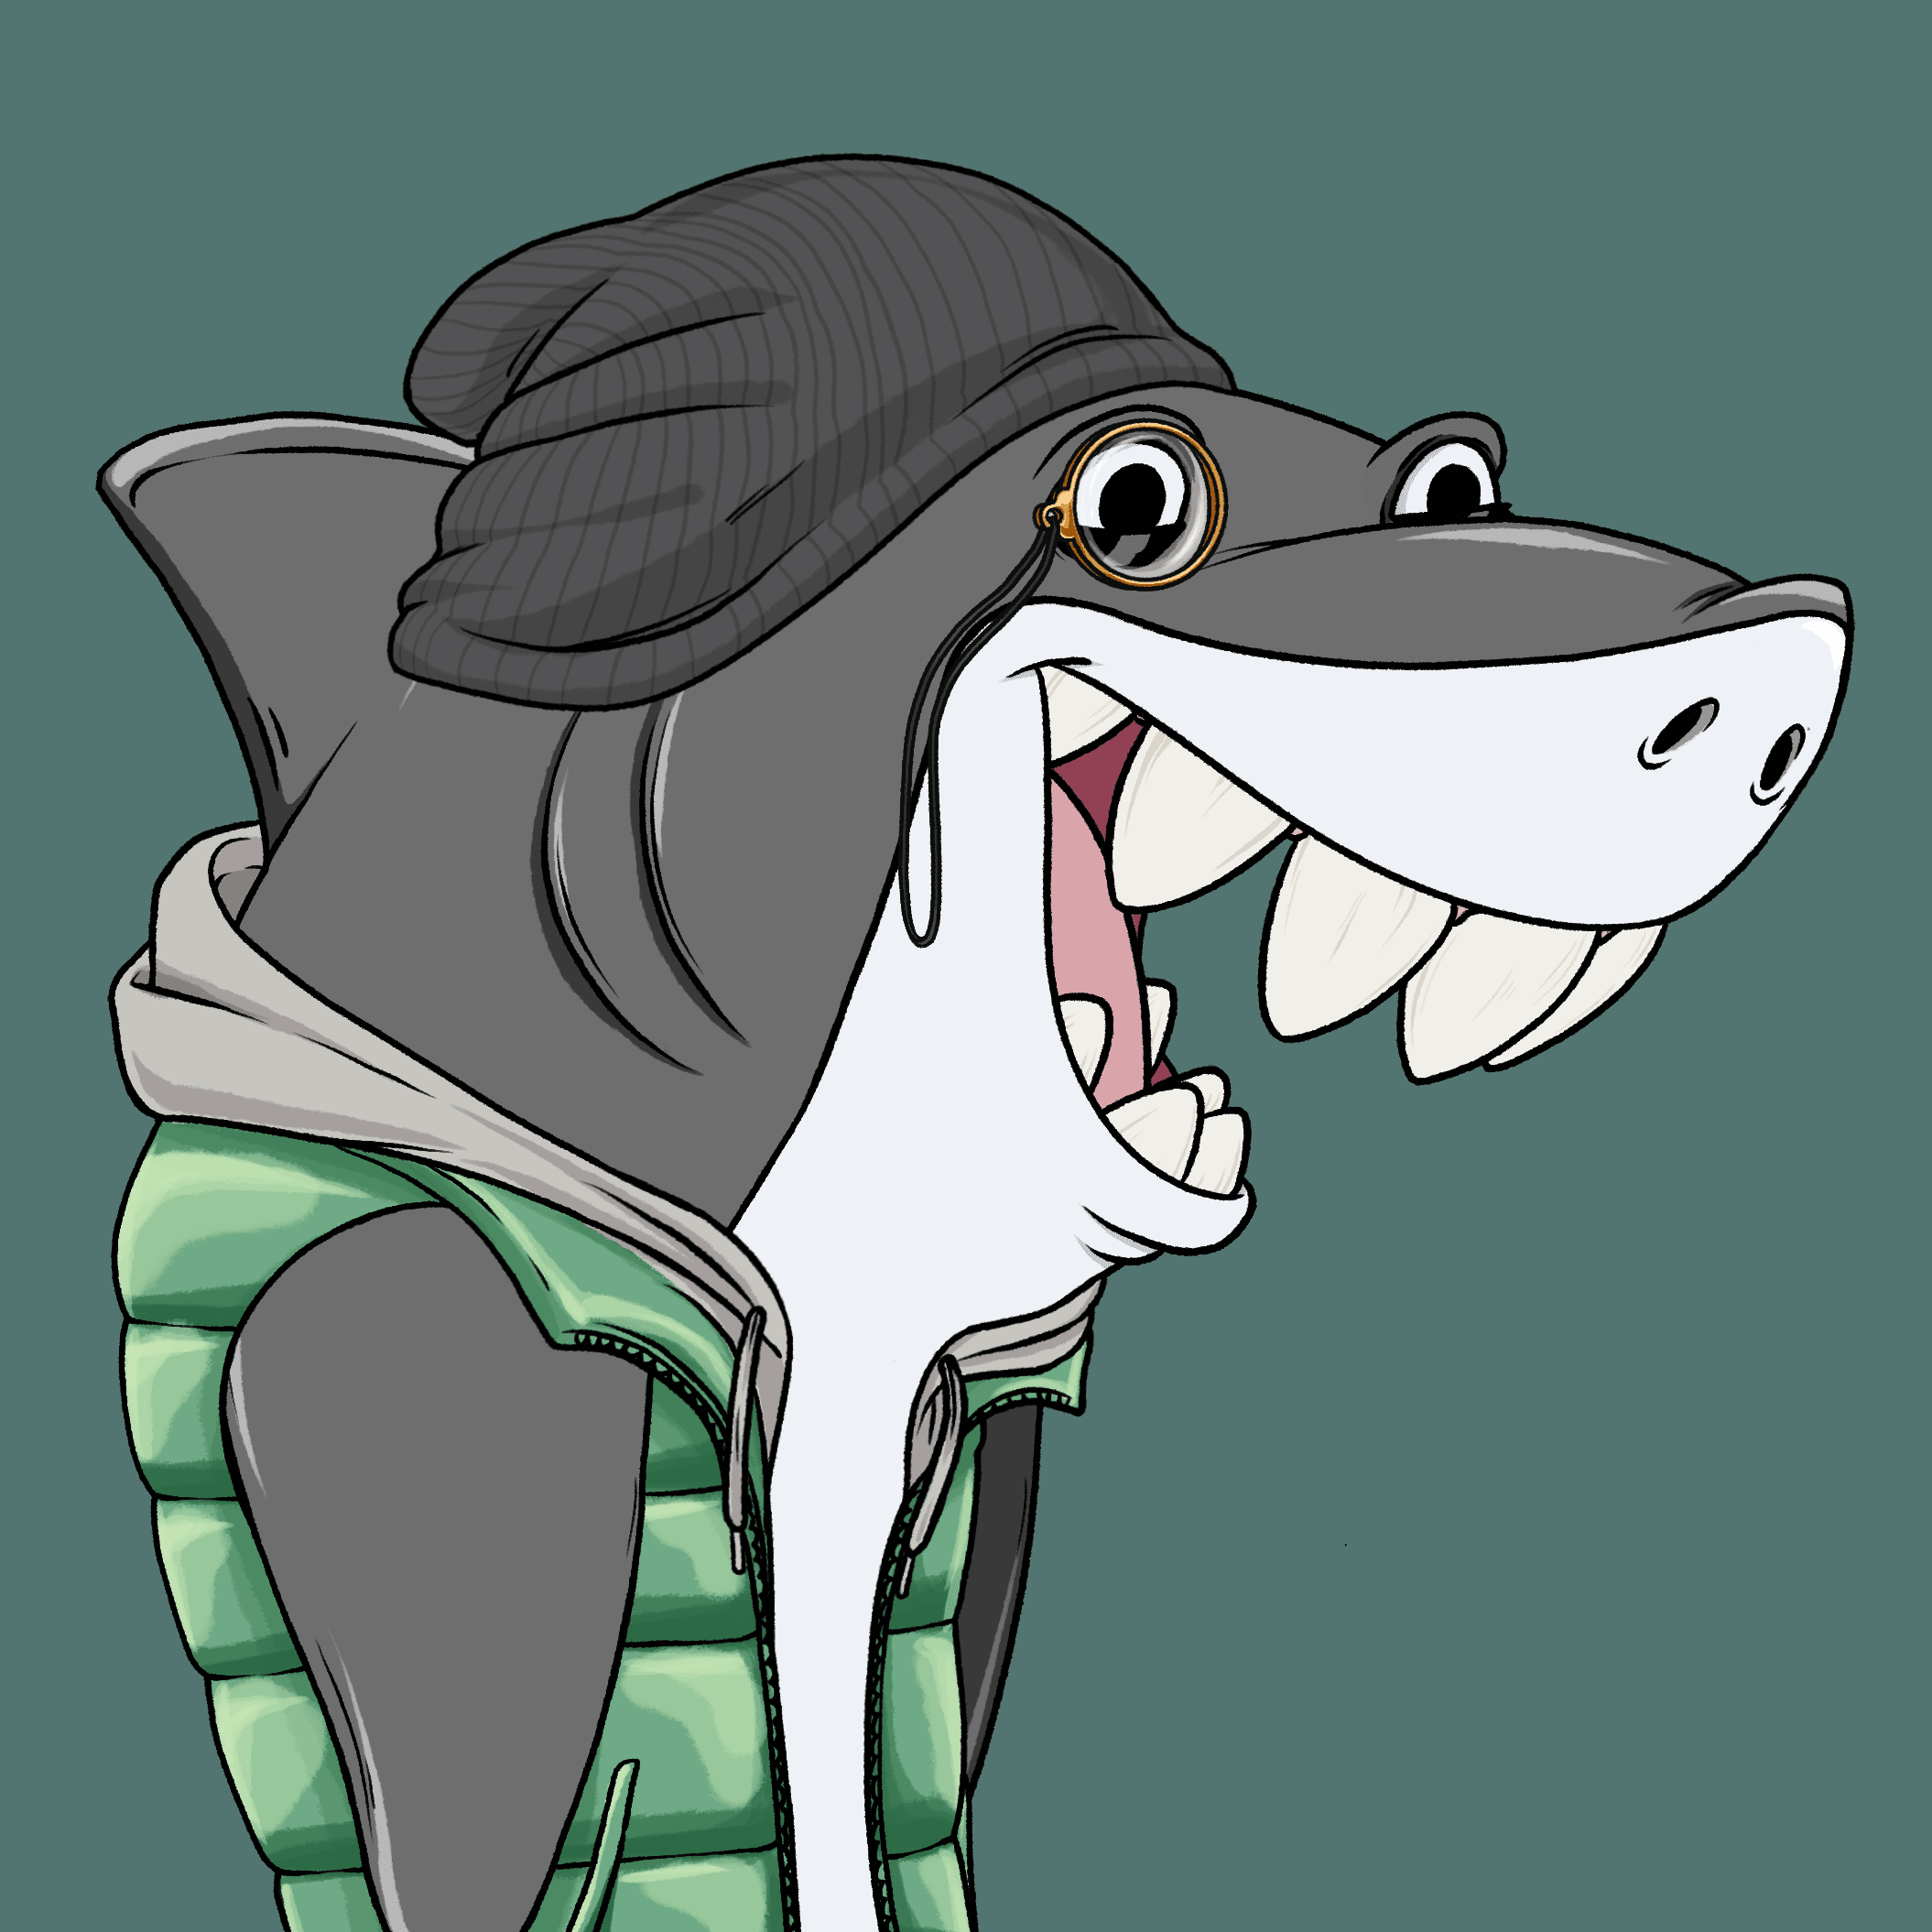 Snarky Shark #17